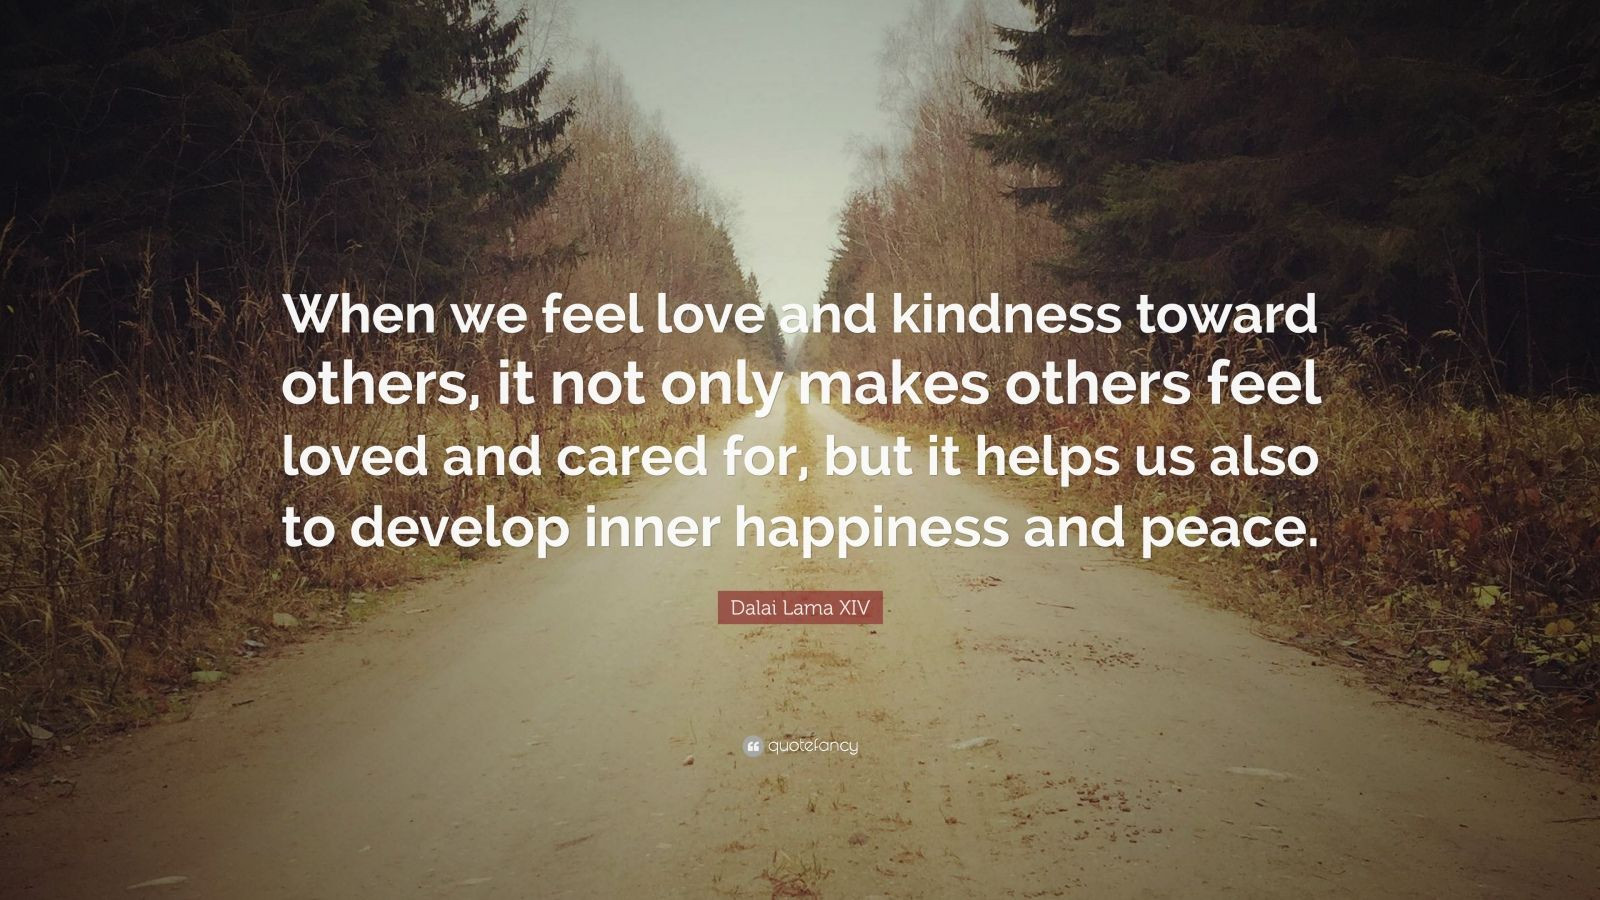 Kindness Quotes Dalai Lama
 Dalai Lama XIV Quote “When we feel love and kindness